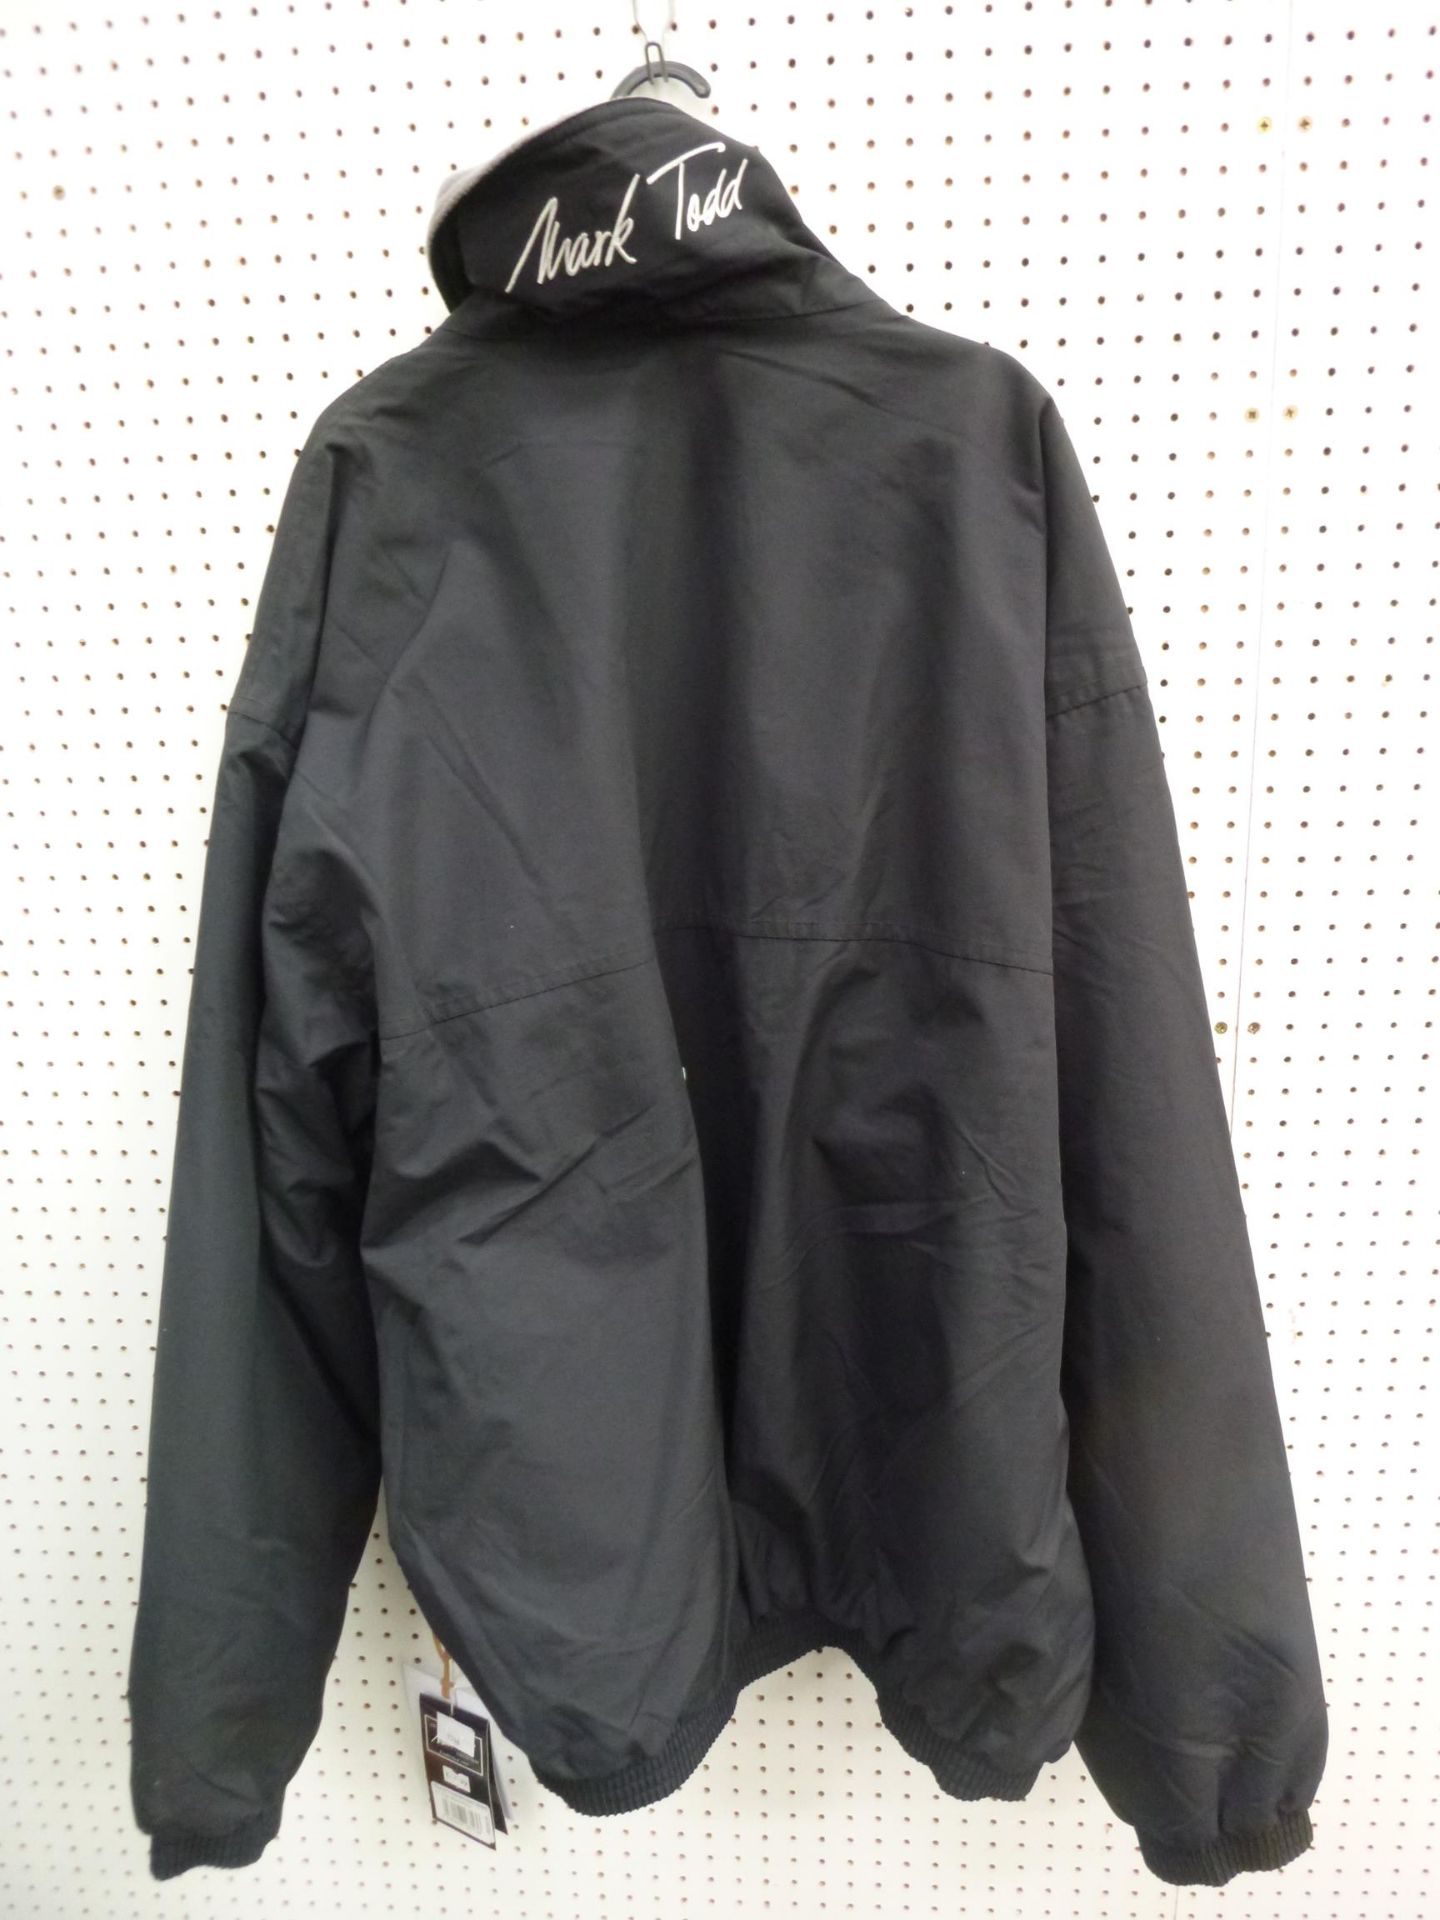 * A New 'Mark Todd' Fleece Lined Blouson Jacket in Black/Grey Size X-Large RRP £47.99 - Bild 3 aus 3